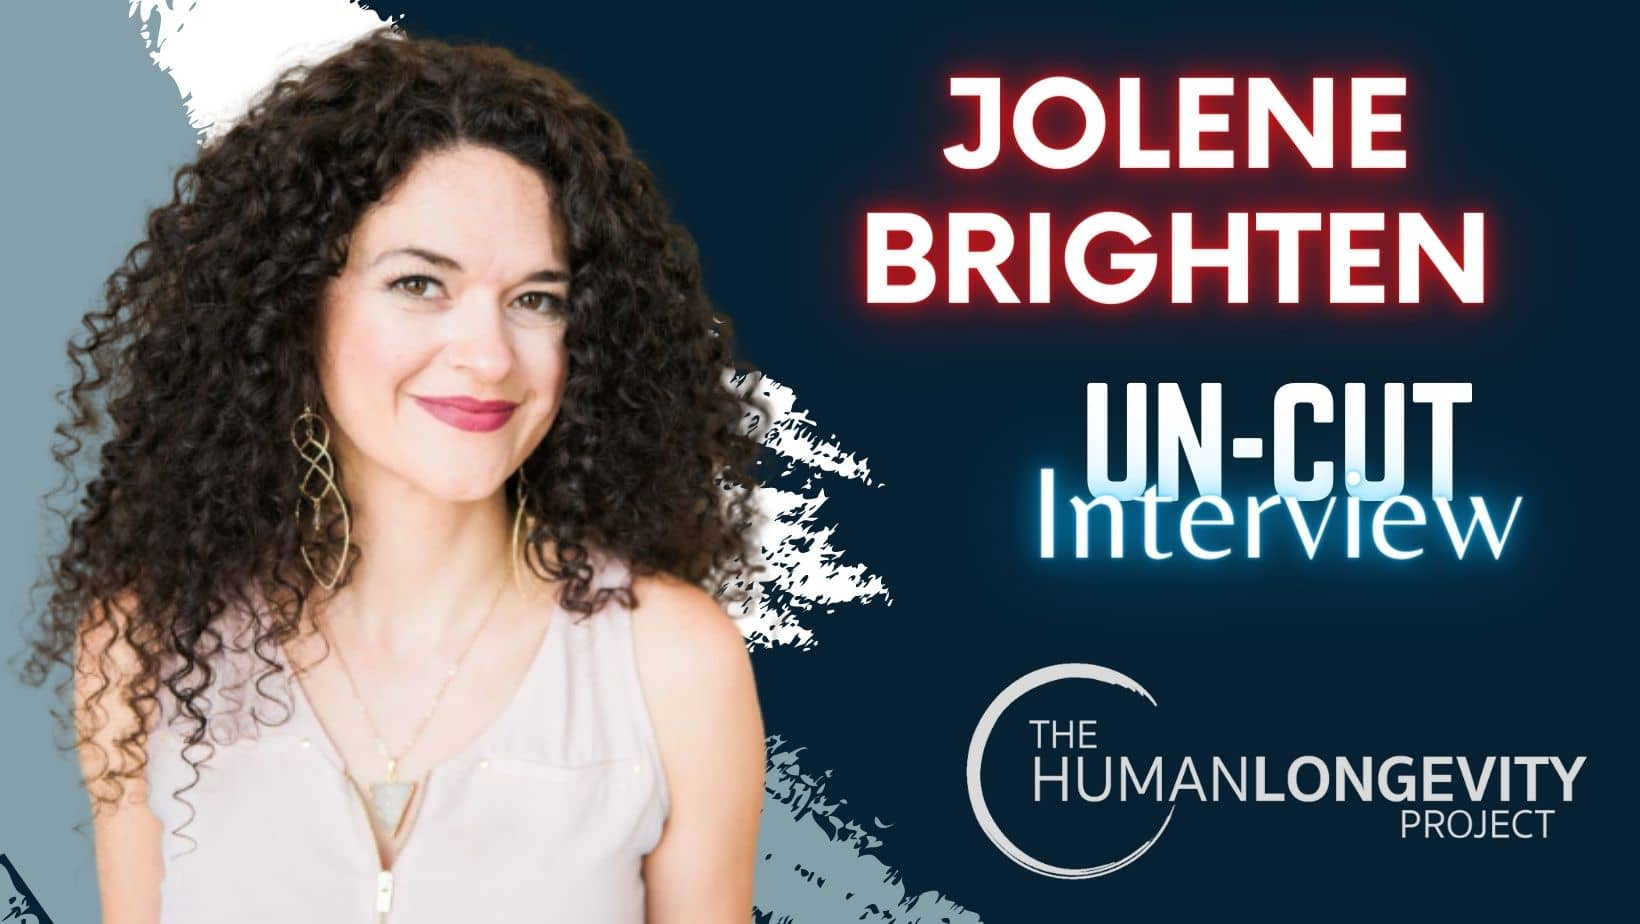 Human Longevity Project Uncut Interview With Dr. Jolene Brighten